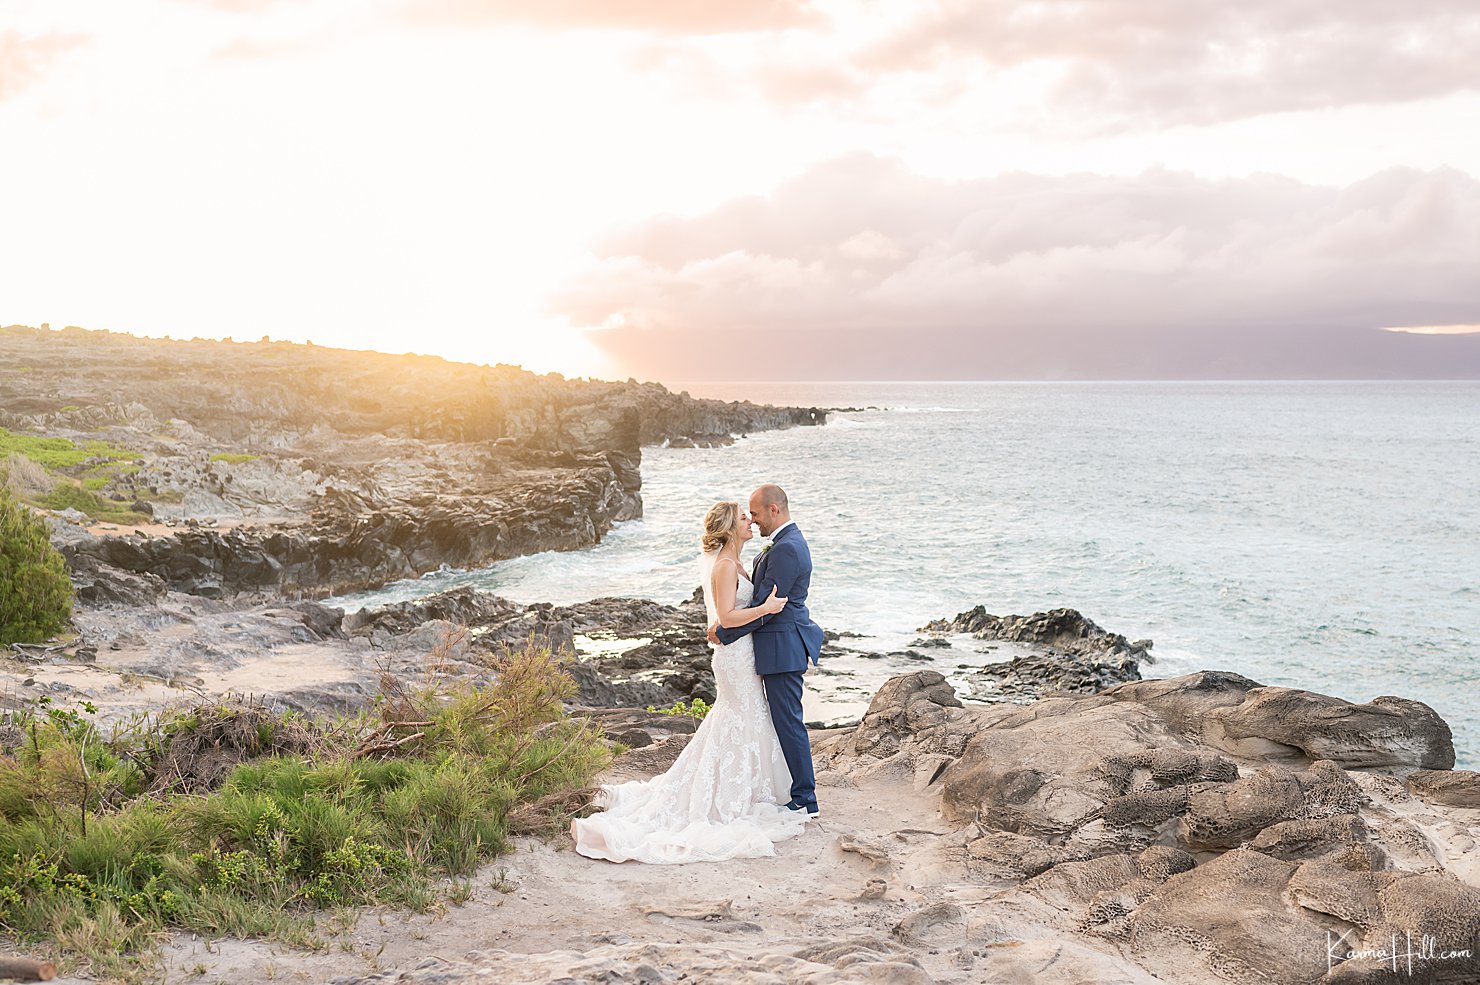 Maui Hawaii Wedding at sunset